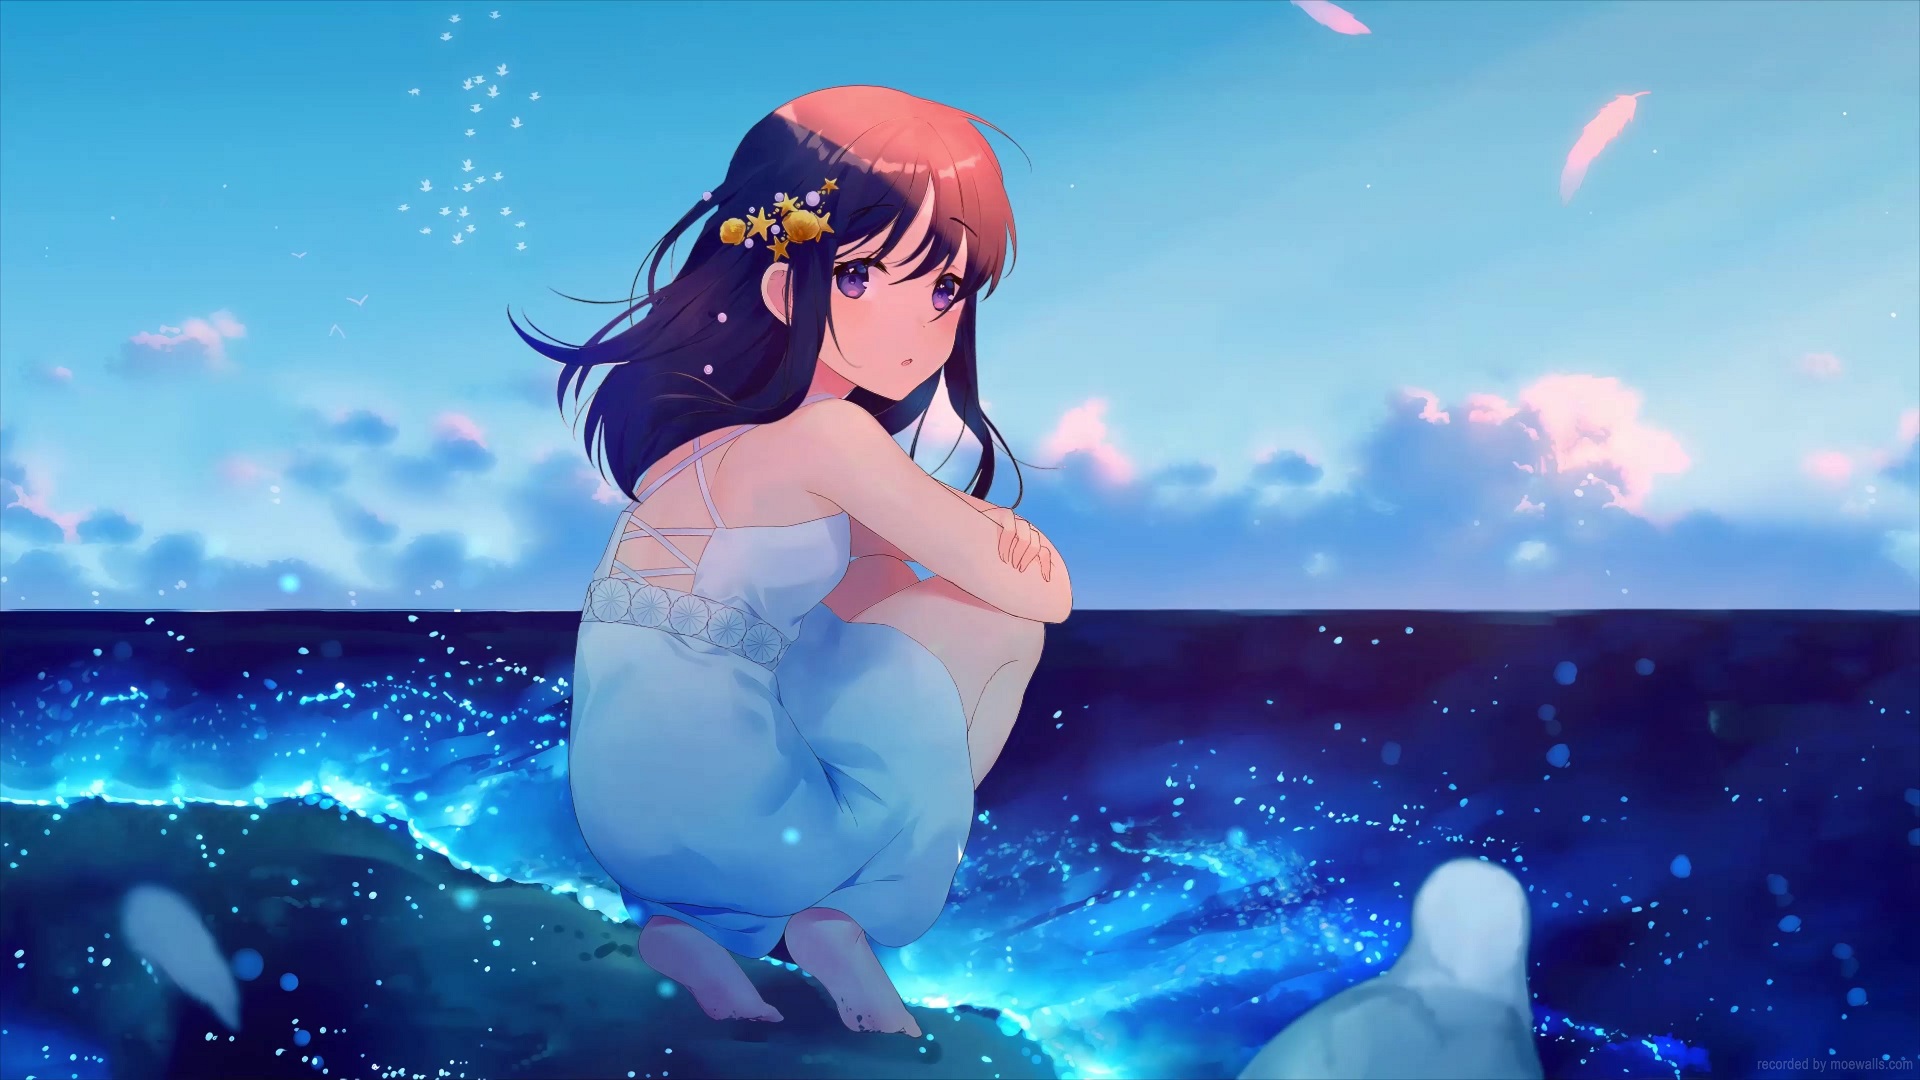 Wallpaper : anime girls, school uniform, beach, seashore, sunset, peaceful,  waves, bangjoy 4096x2477 - 22seconds - 2255140 - HD Wallpapers - WallHere